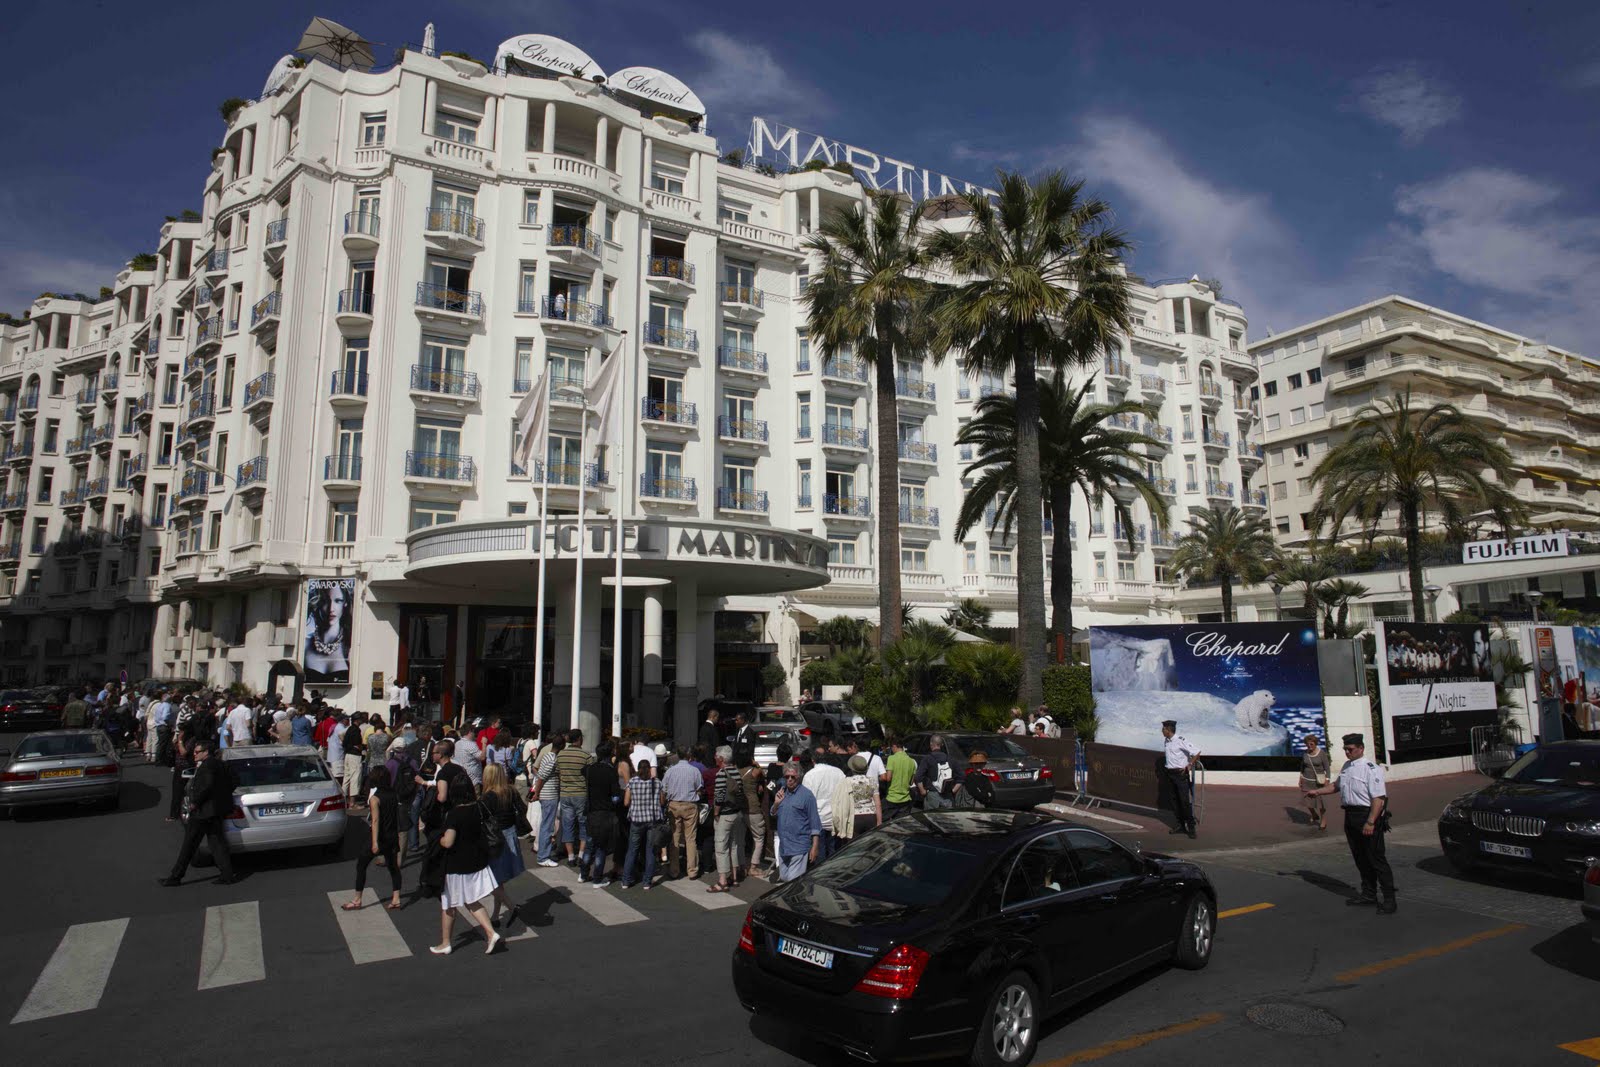 http://2.bp.blogspot.com/-1DcQp4Pu8Vg/TdBcjKuJoGI/AAAAAAAAAno/pxgYHyojNXY/s1600/Hotel-Martinez-during-the-Cannes-Film-Festival.jpg